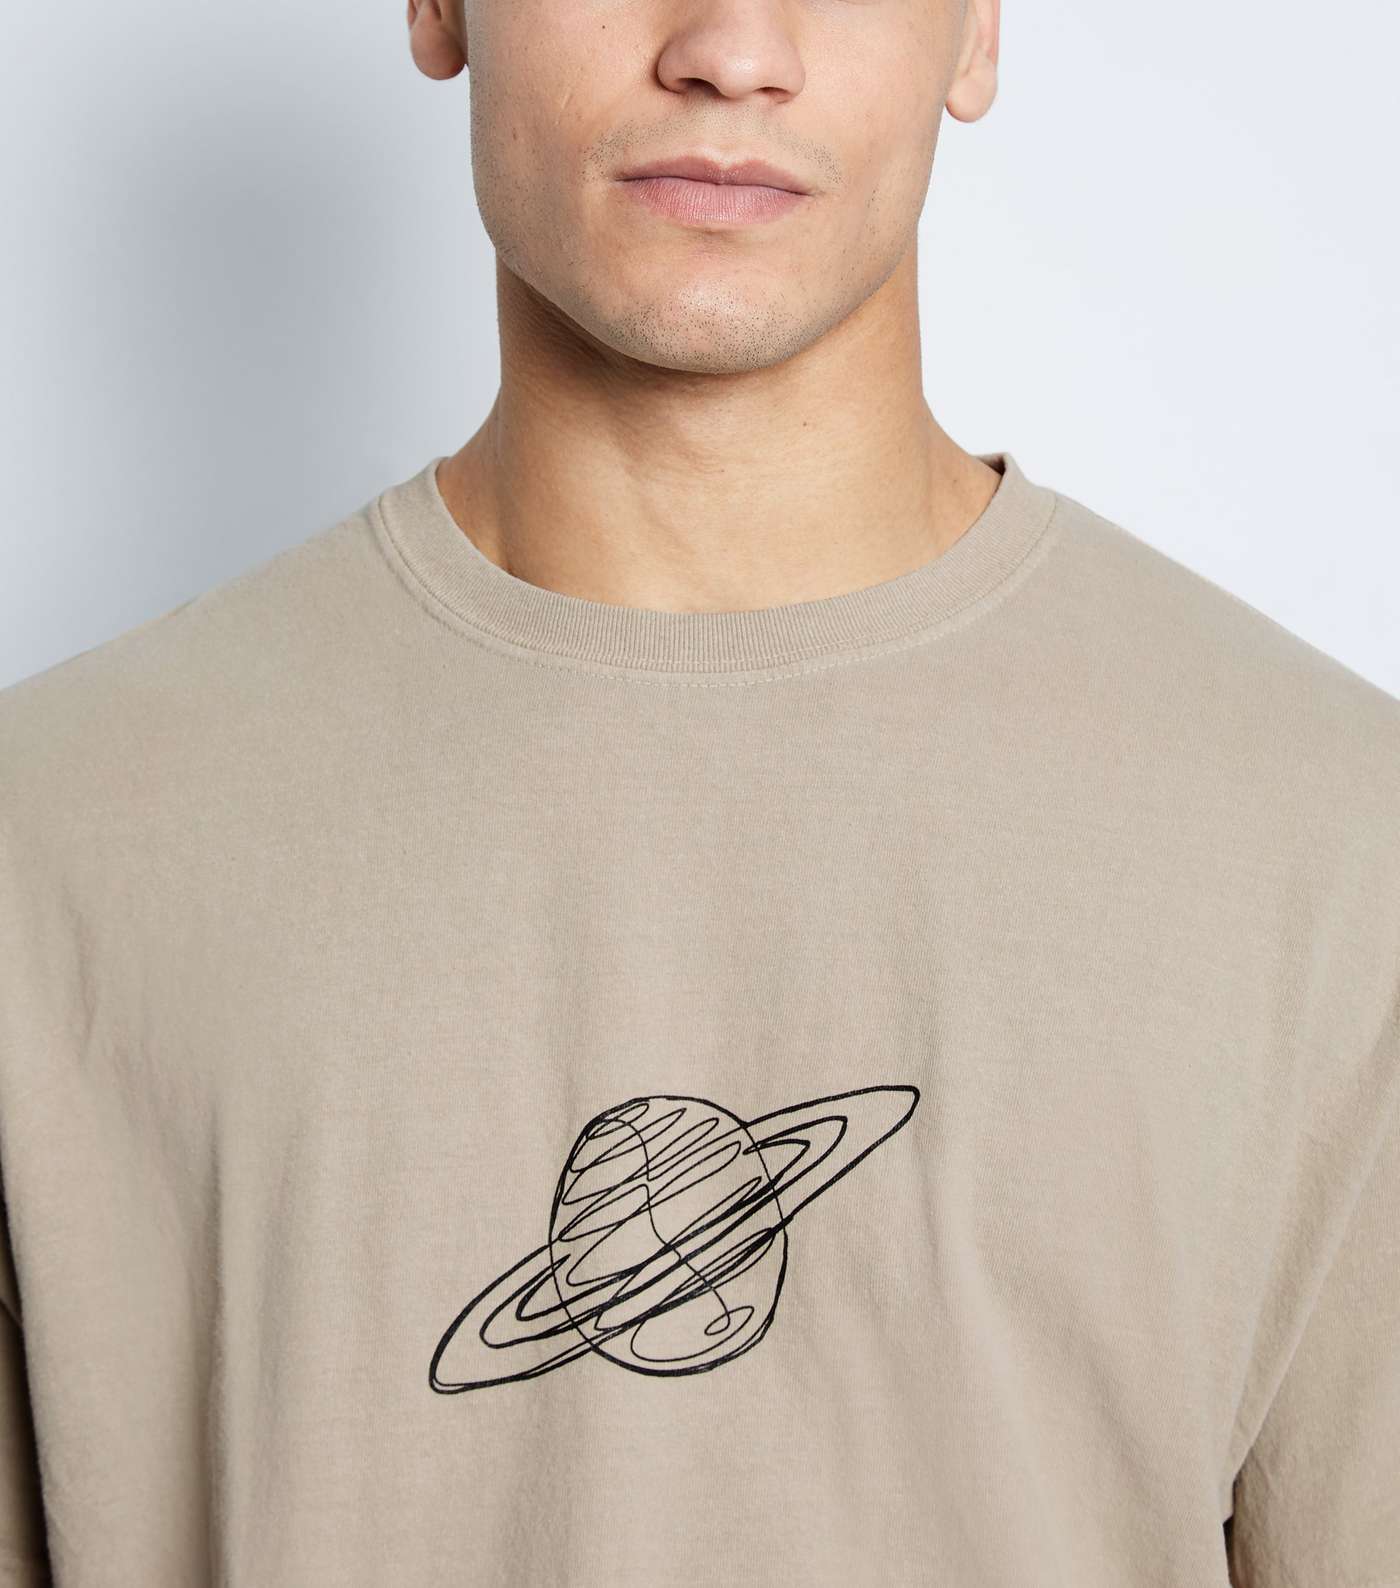 Stone Saturn Sketch T-Shirt Image 5